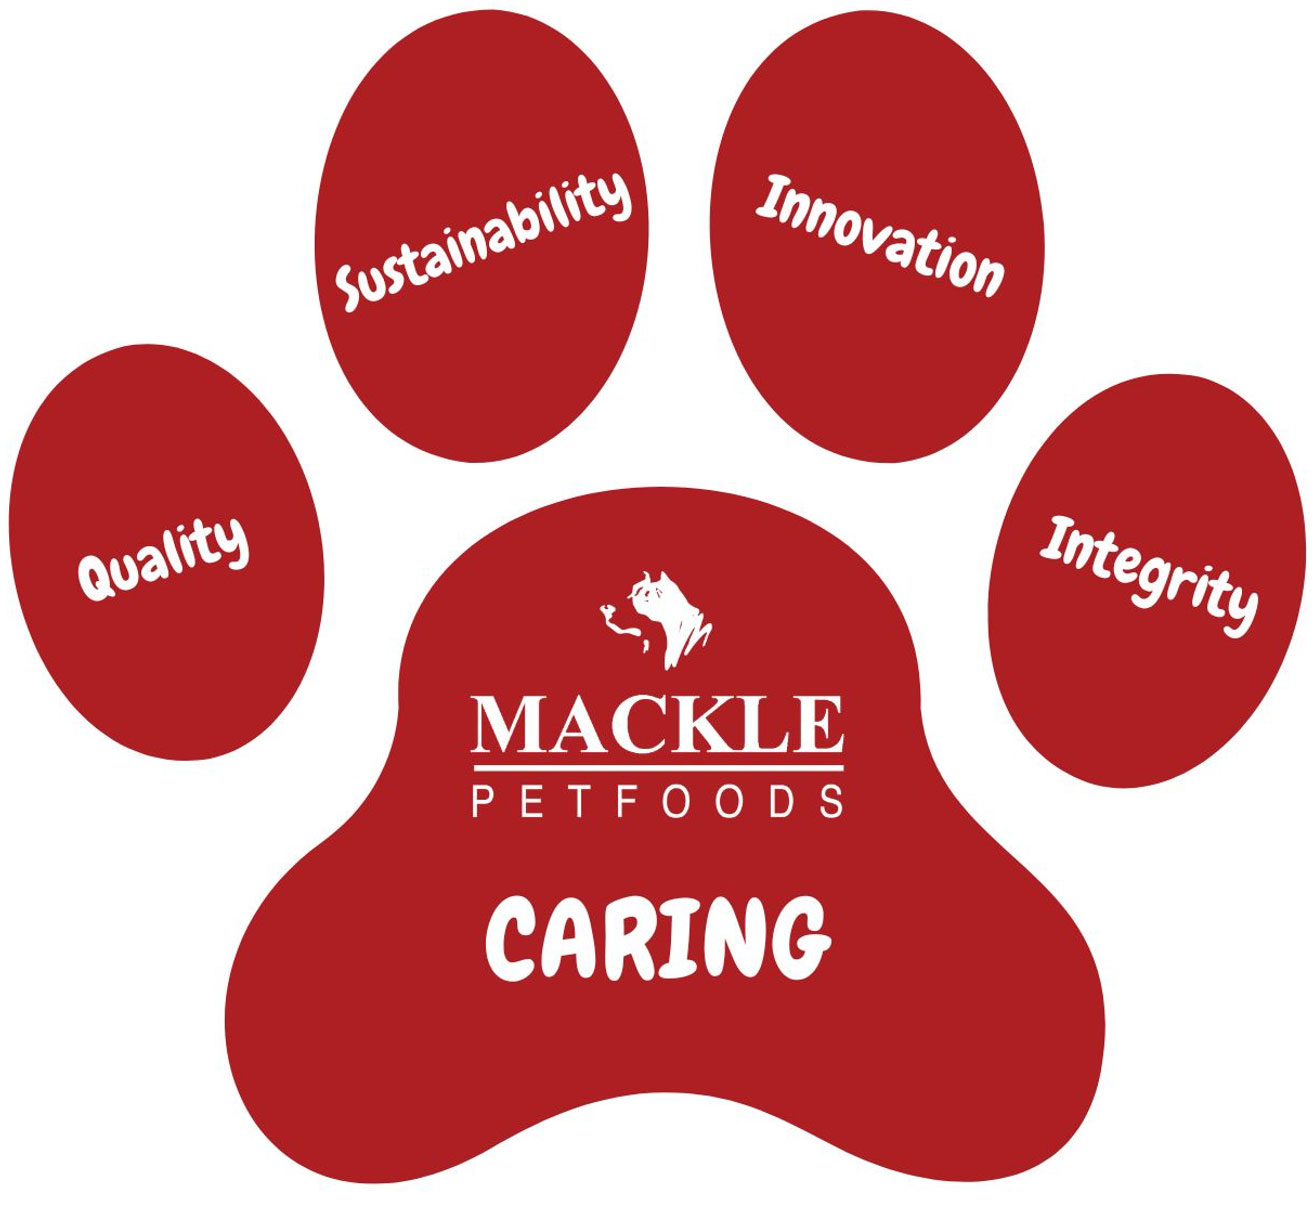 Mackle Petfoods Company Values